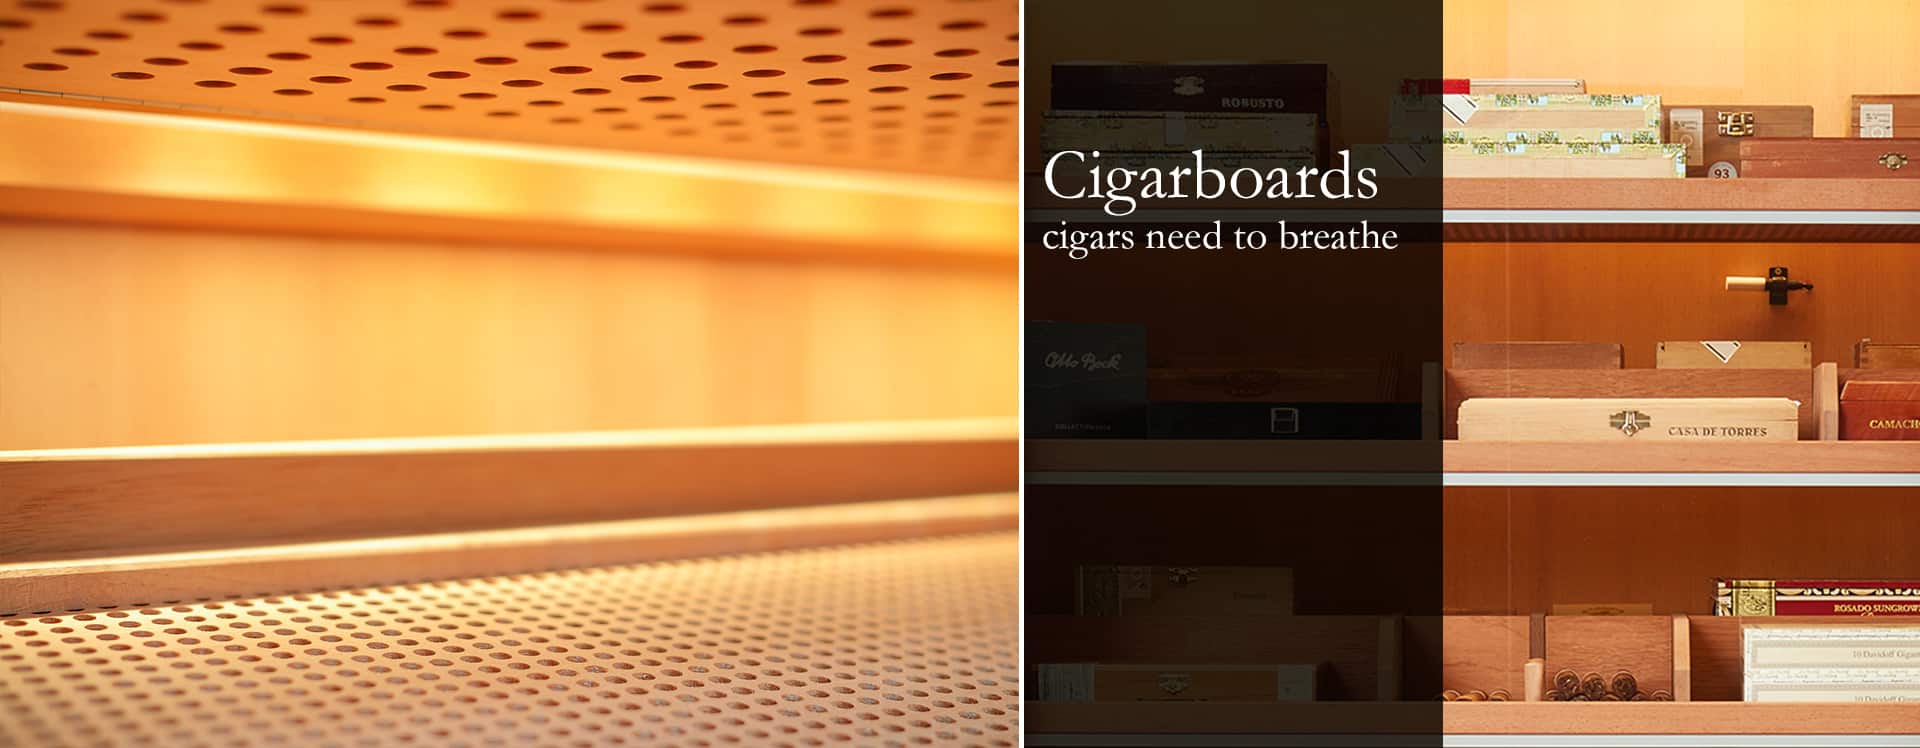 GERBER Humidors Cigarboards